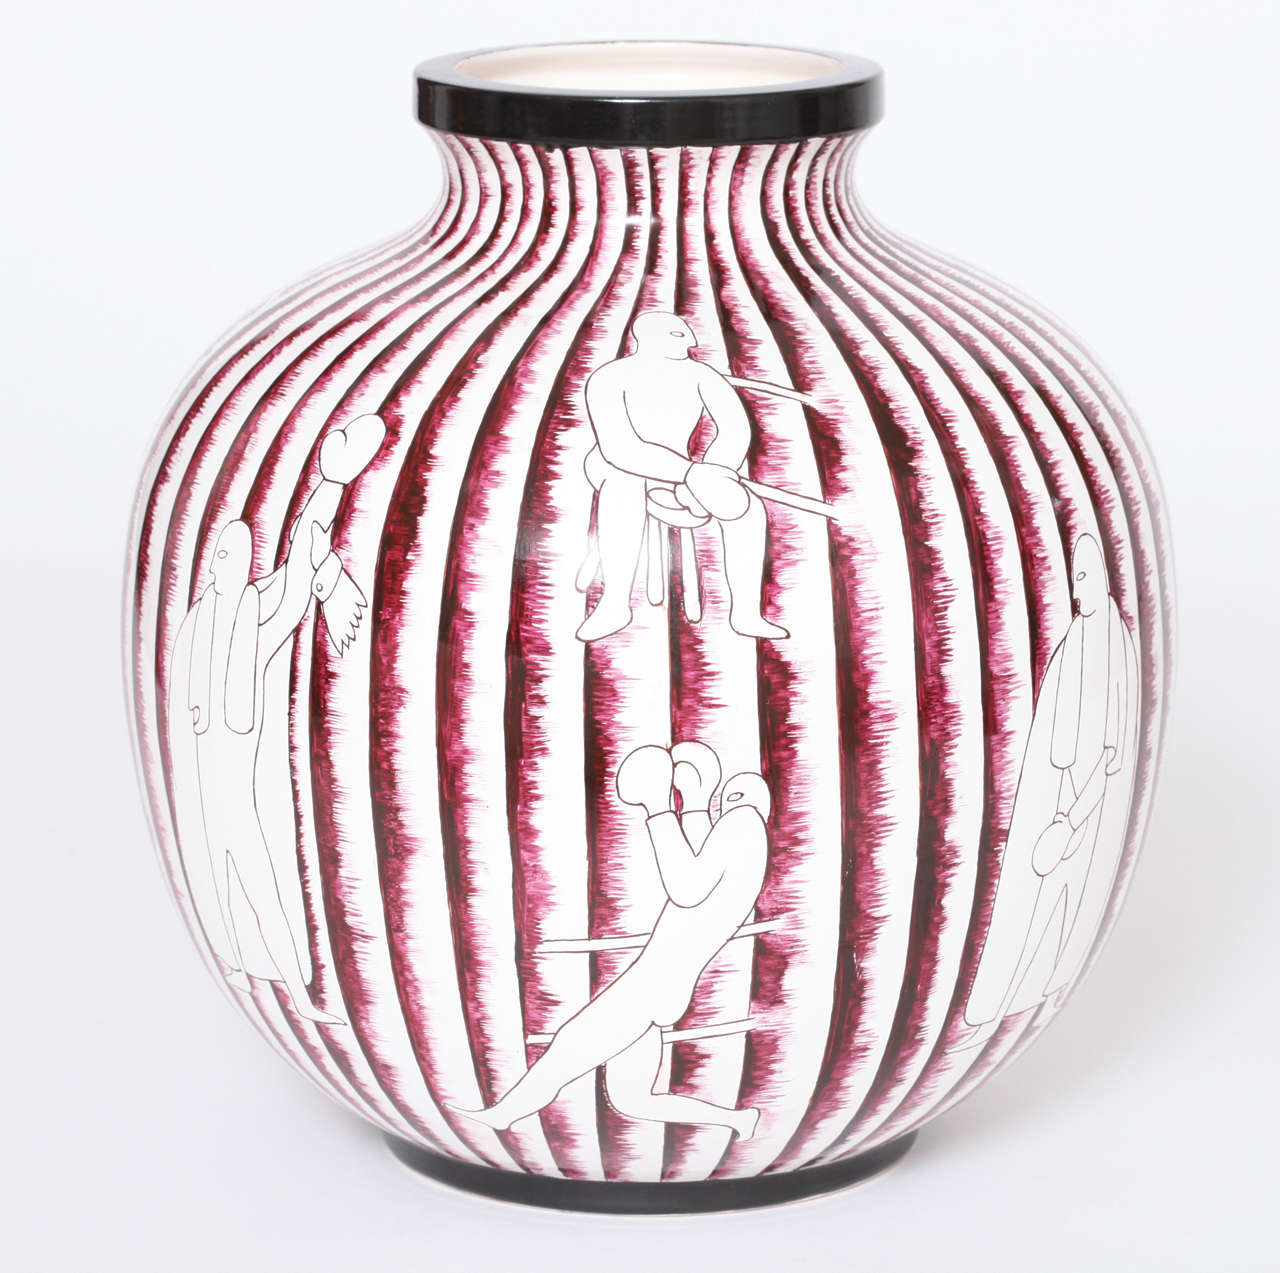 A hand glazed and kiln fired Gio Ponti designed boxing vase for,
Richard Ginori, circa 1930. Marked: Richard-Ginori S. Cristoforo Milano made in Italy.